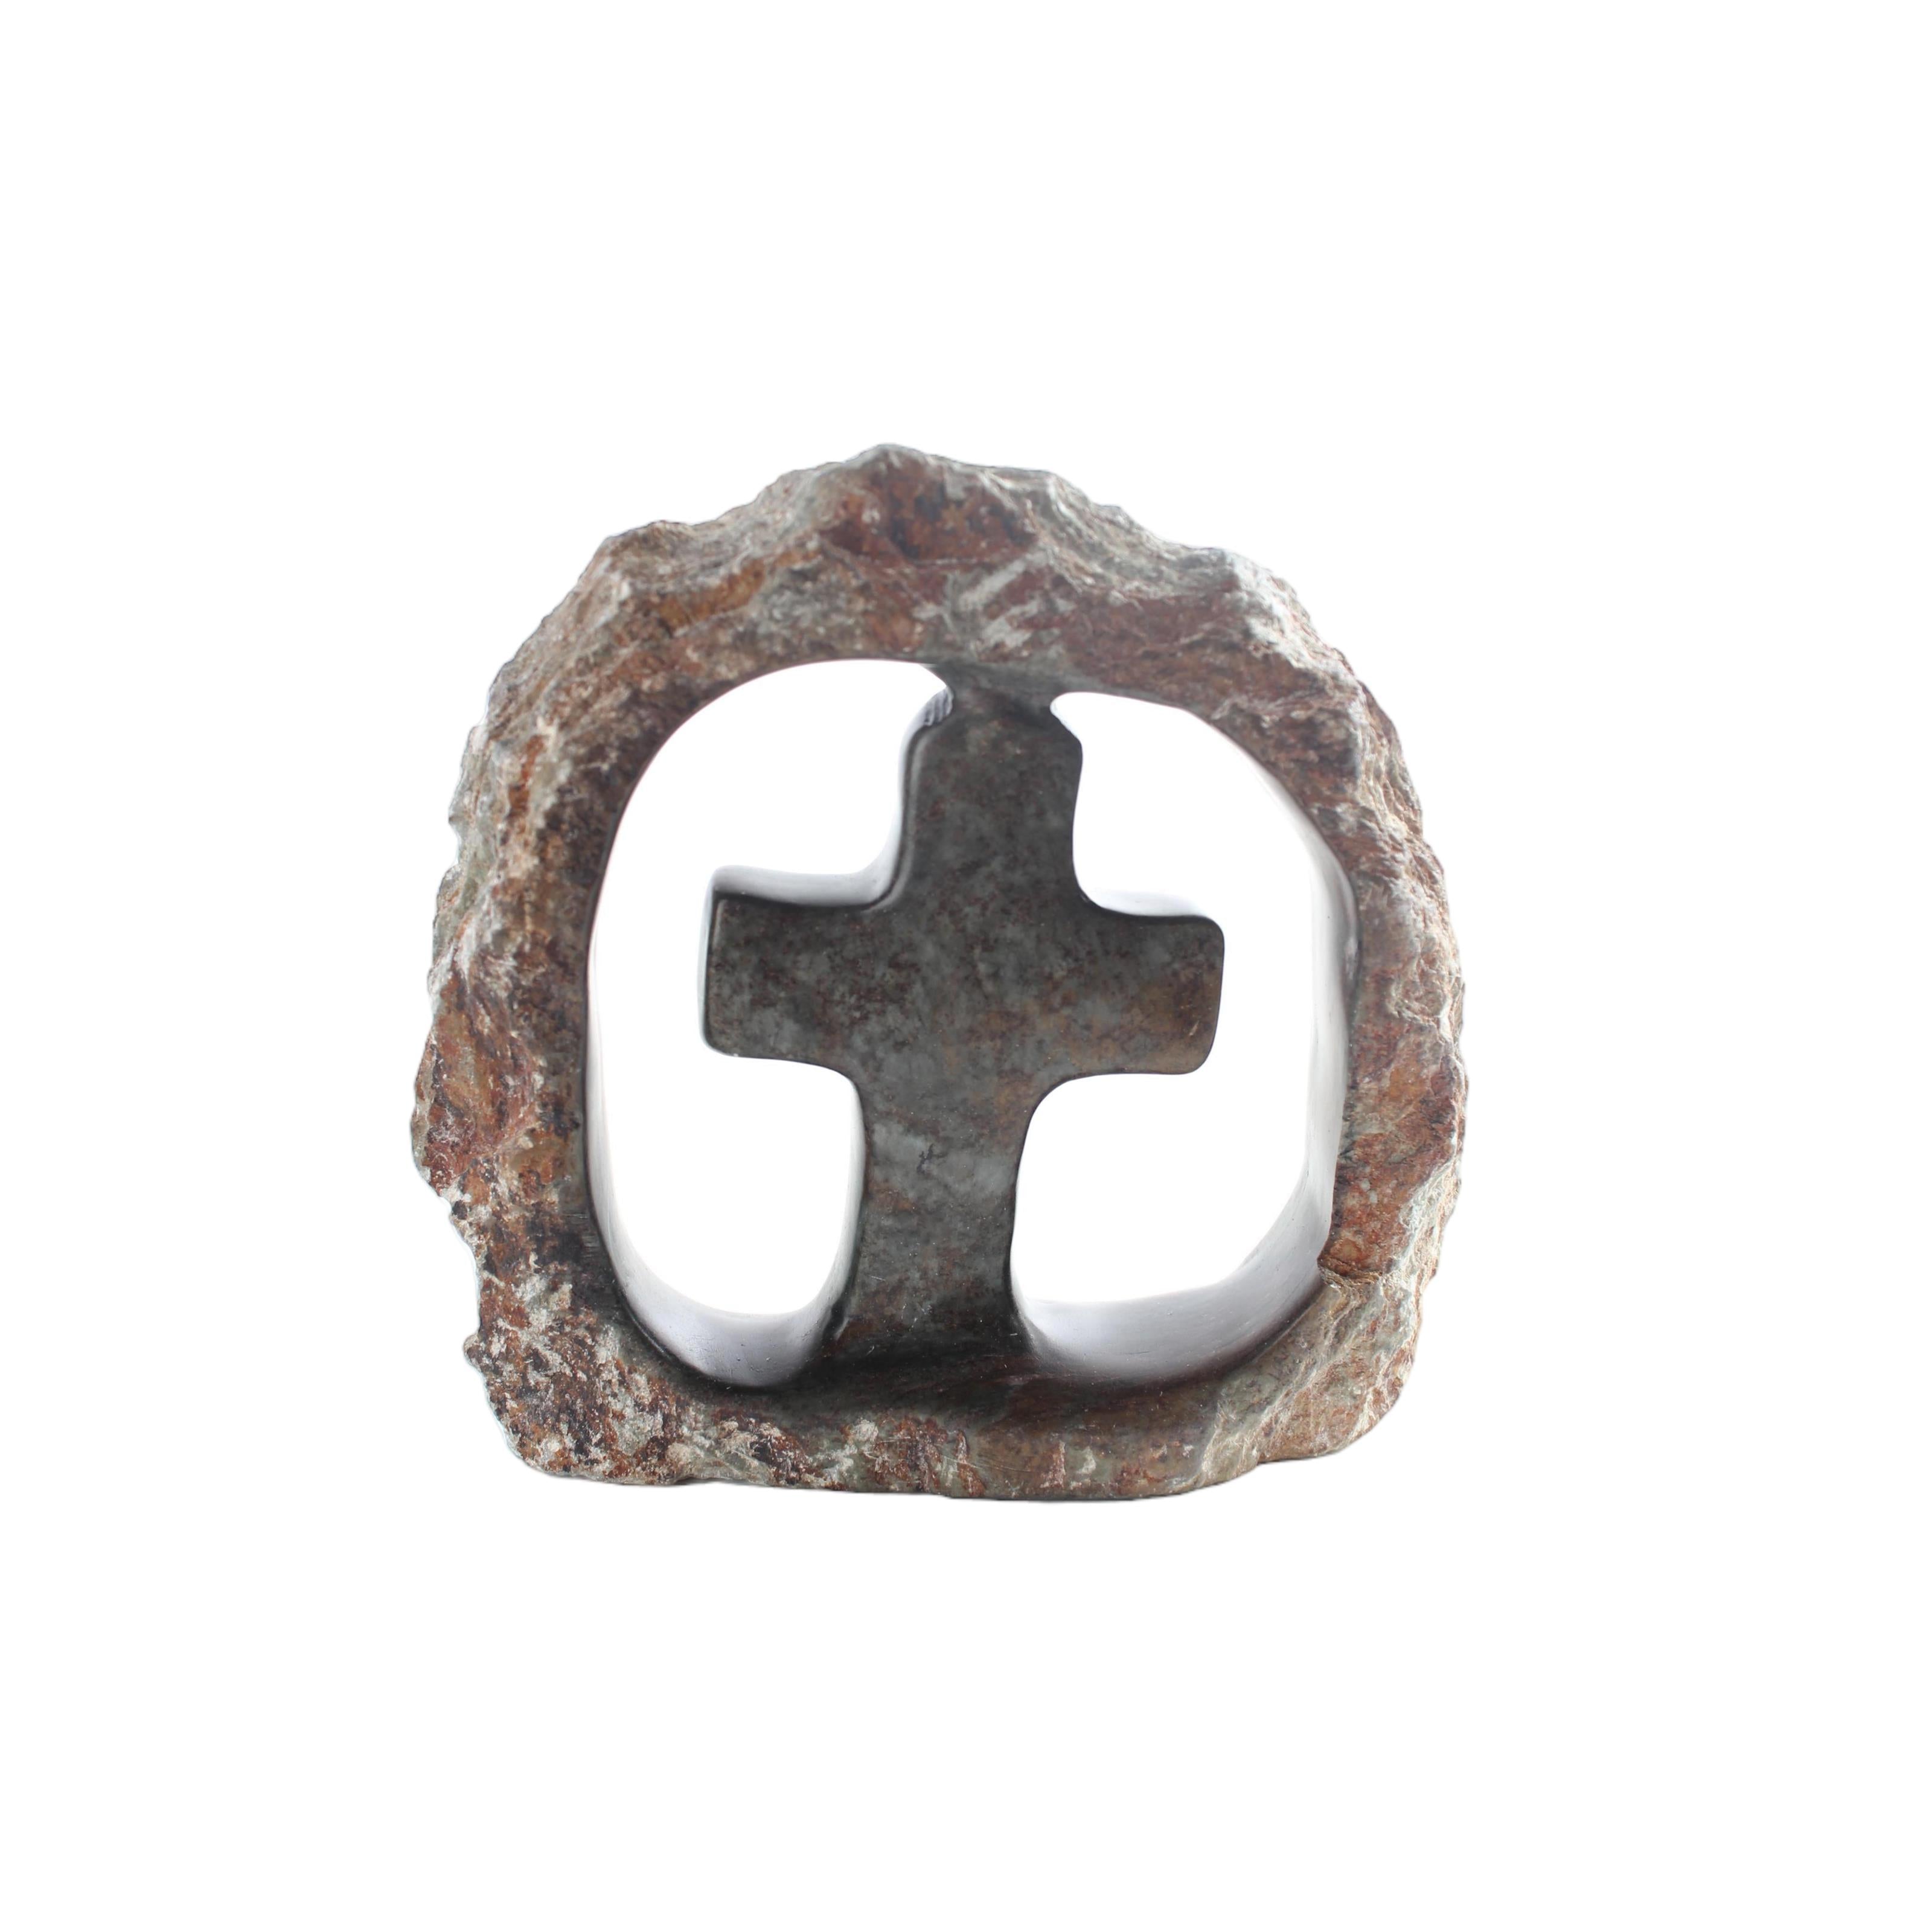 Shona Tribe Serpentine Stone Crosses  ~5.5" Tall